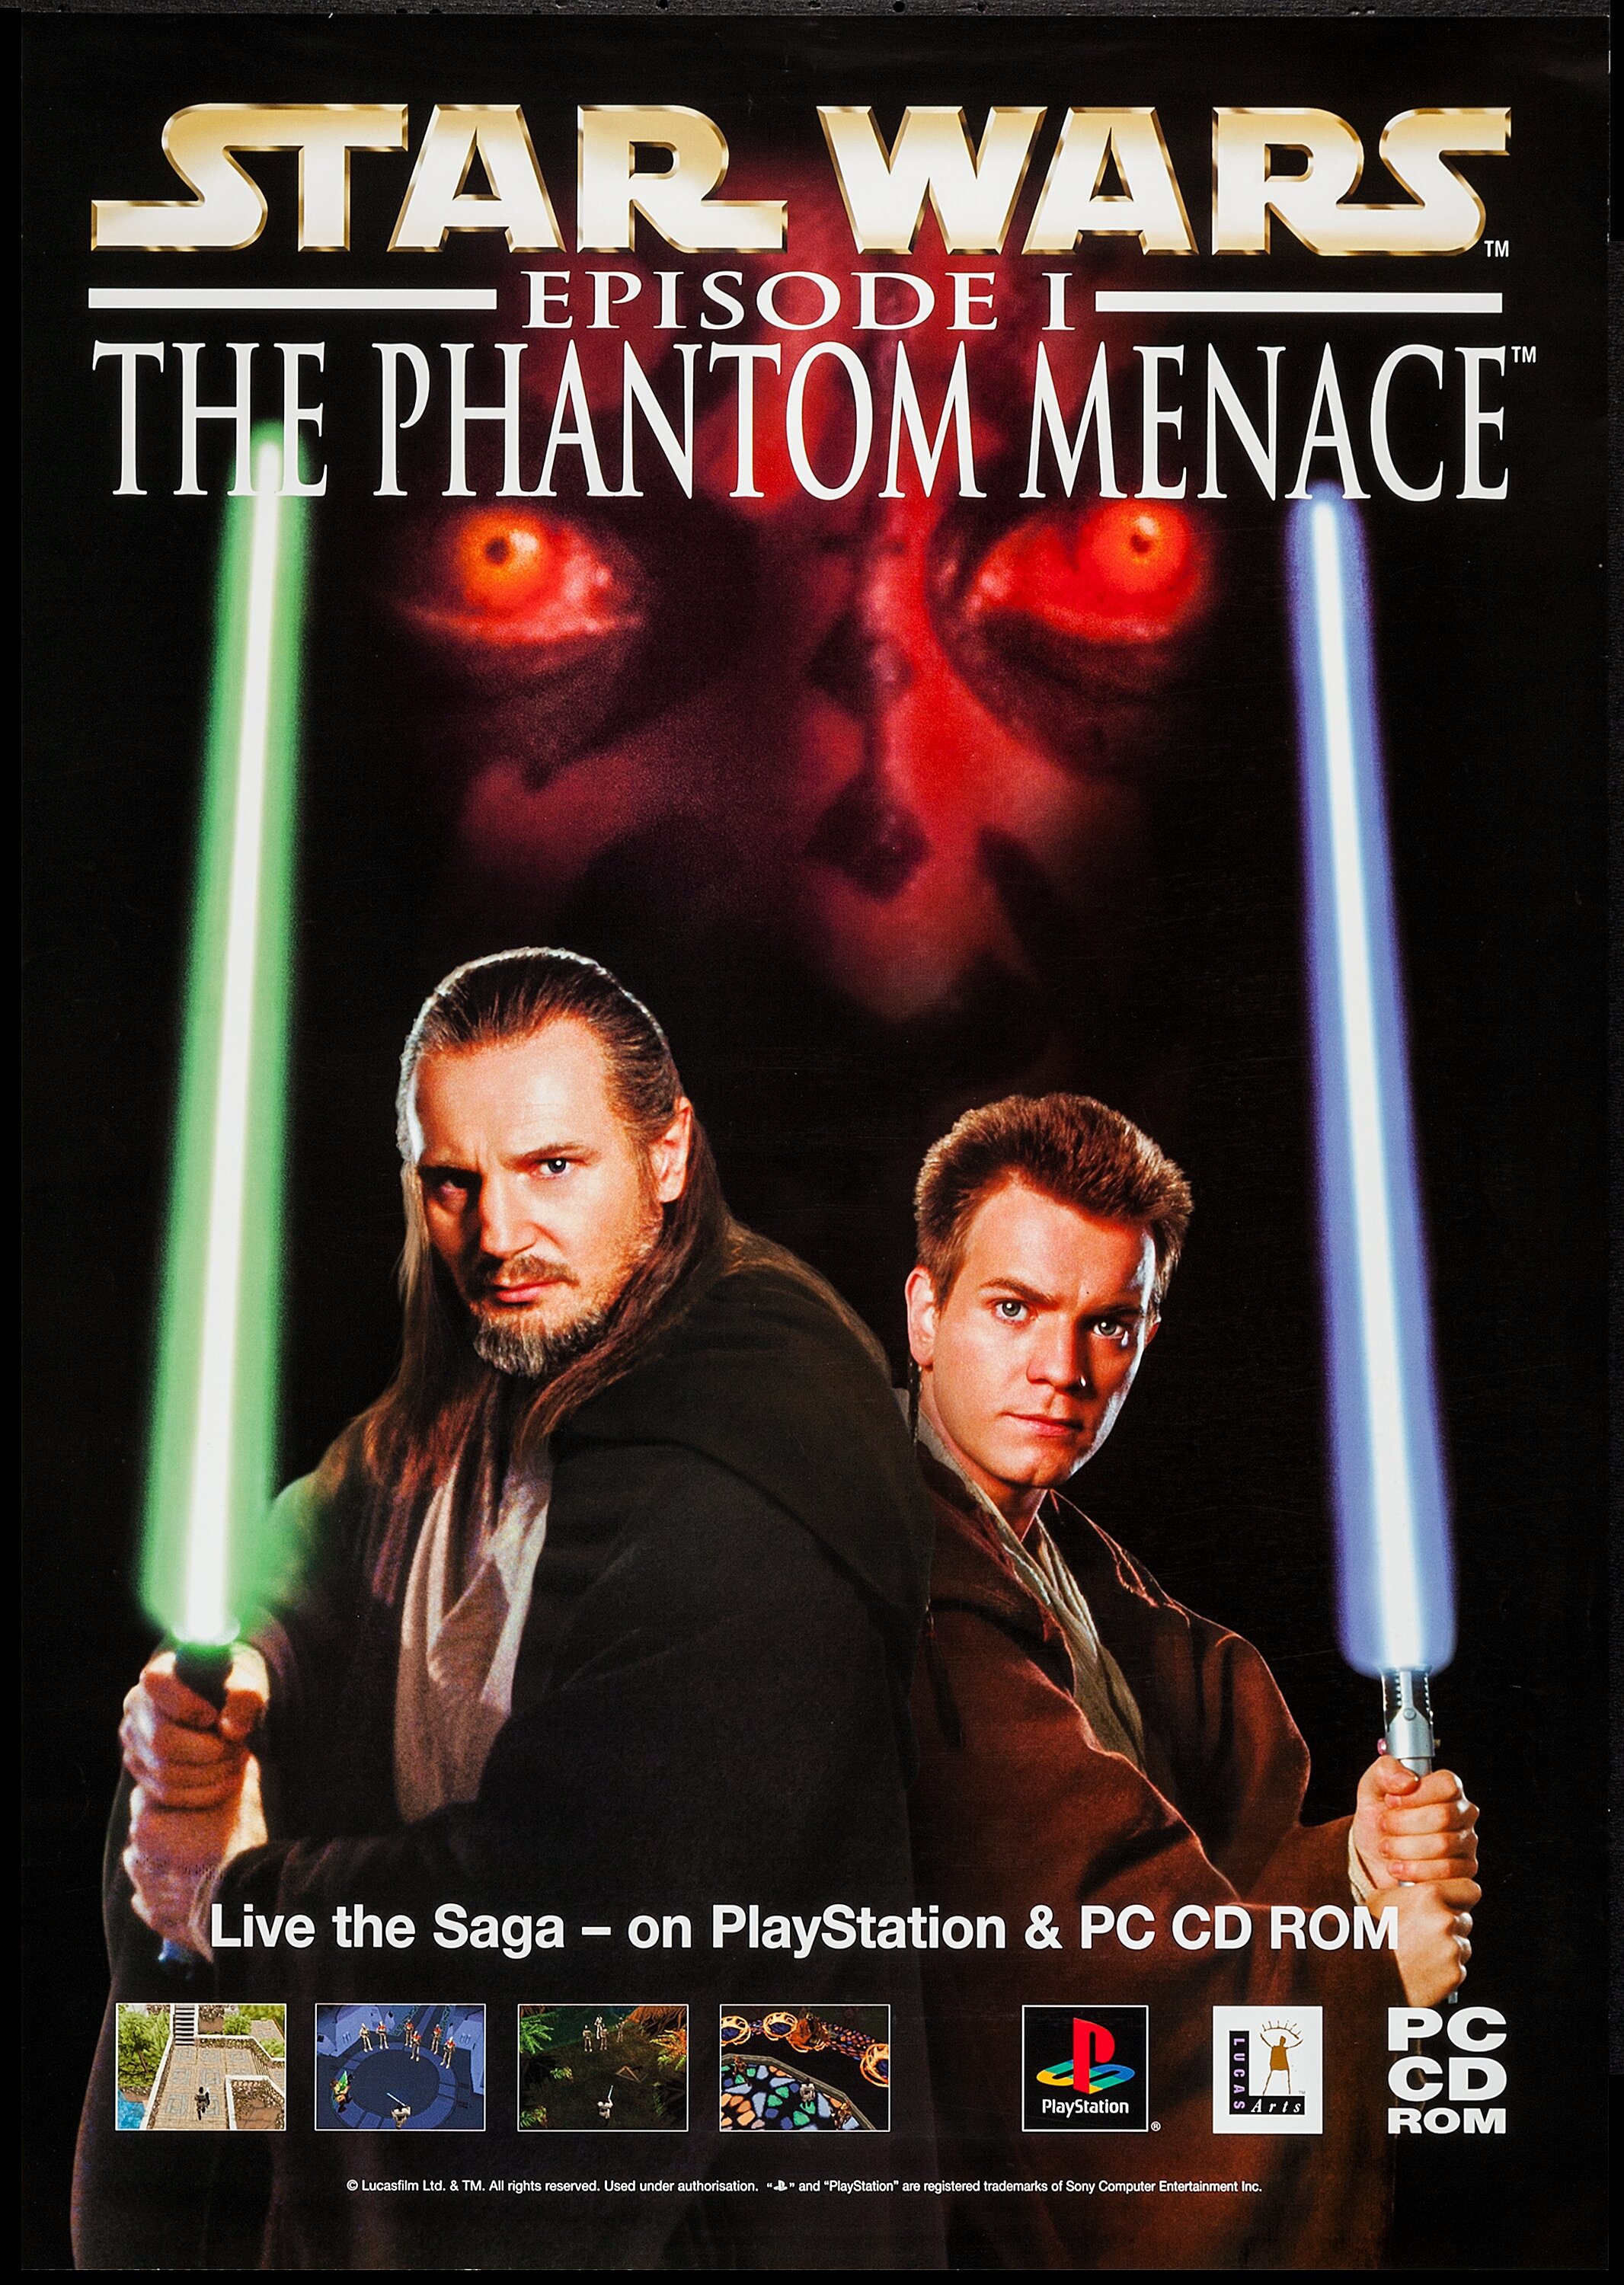 Star Wars Episode I The Phantom Menace Sony 1999 Playstation Lot 53411 Heritage Auctions